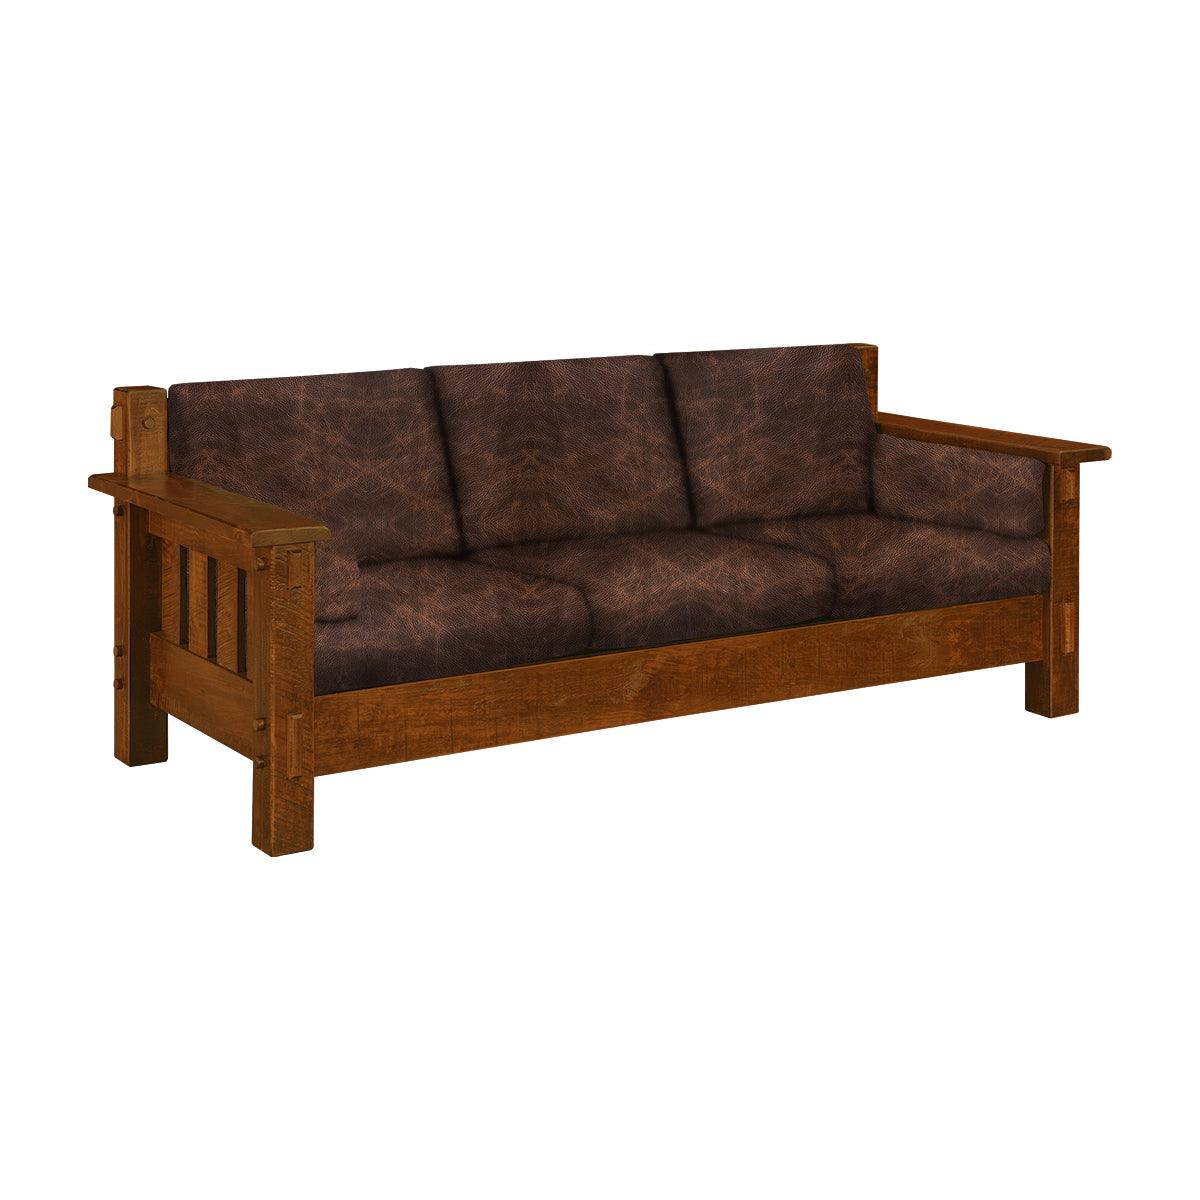 Mountain Roughsawn Wood Sofa